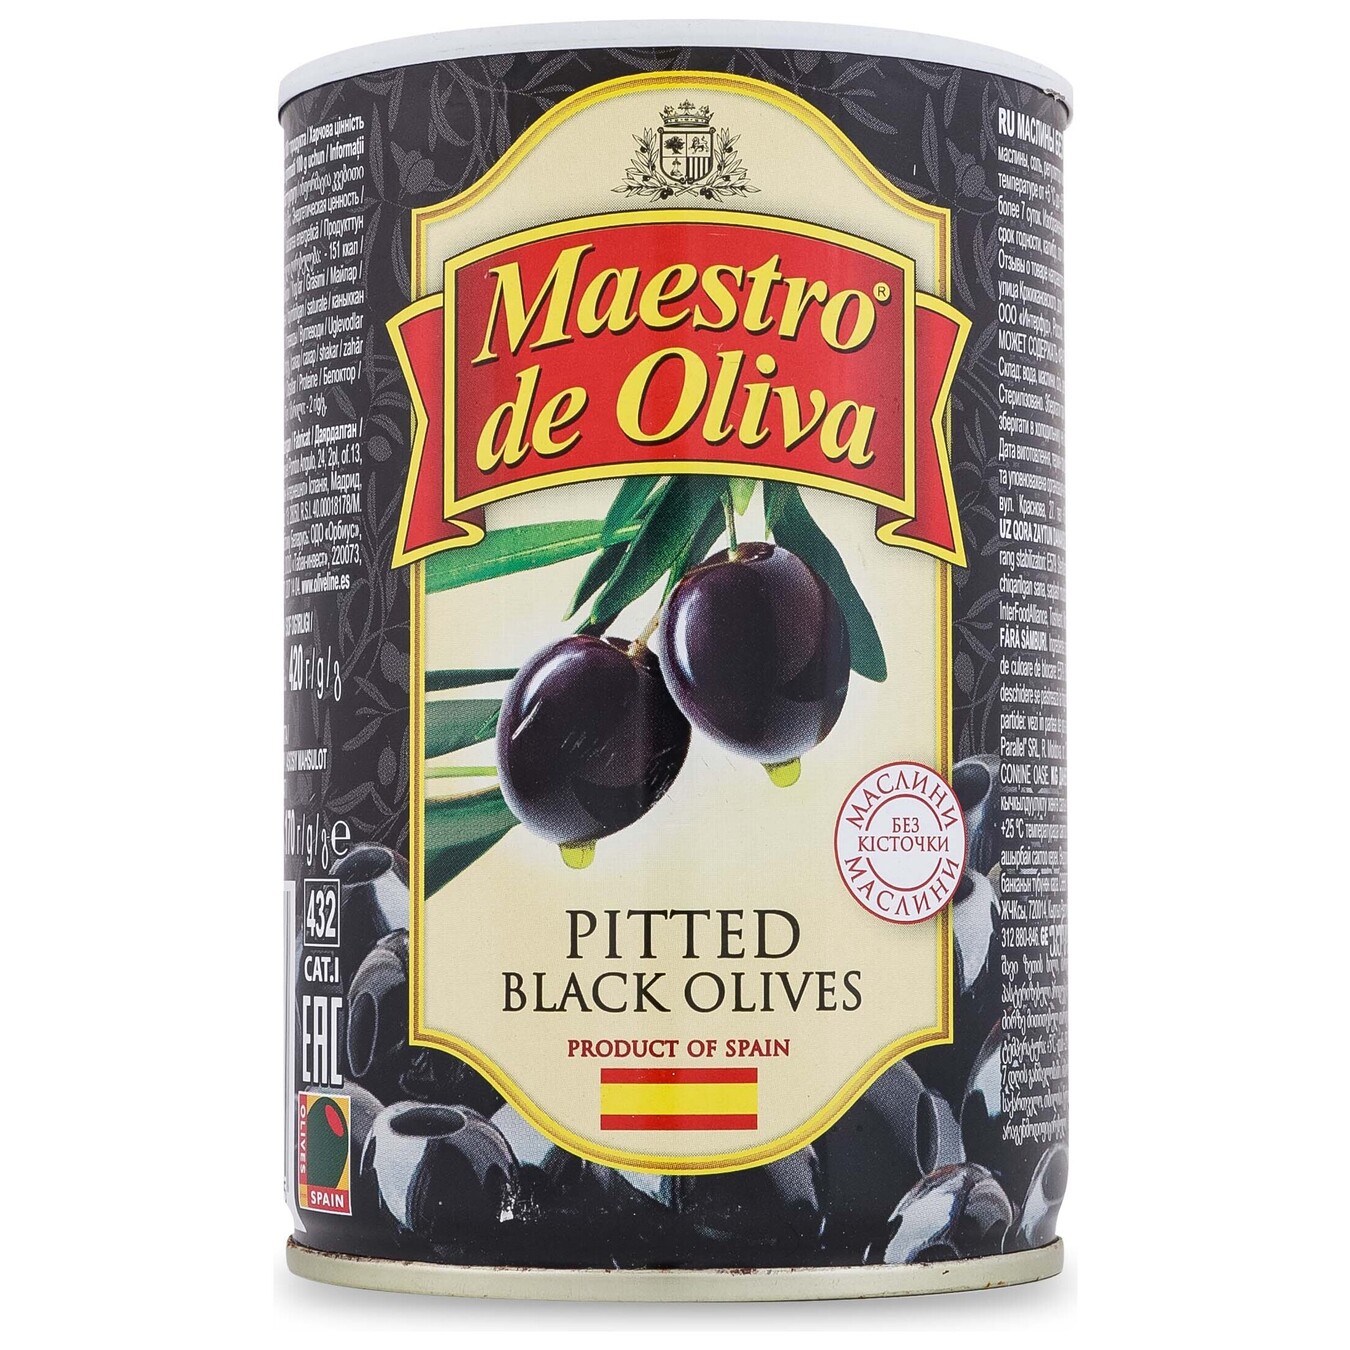 Maestro de Oliva black pitted olives 420g